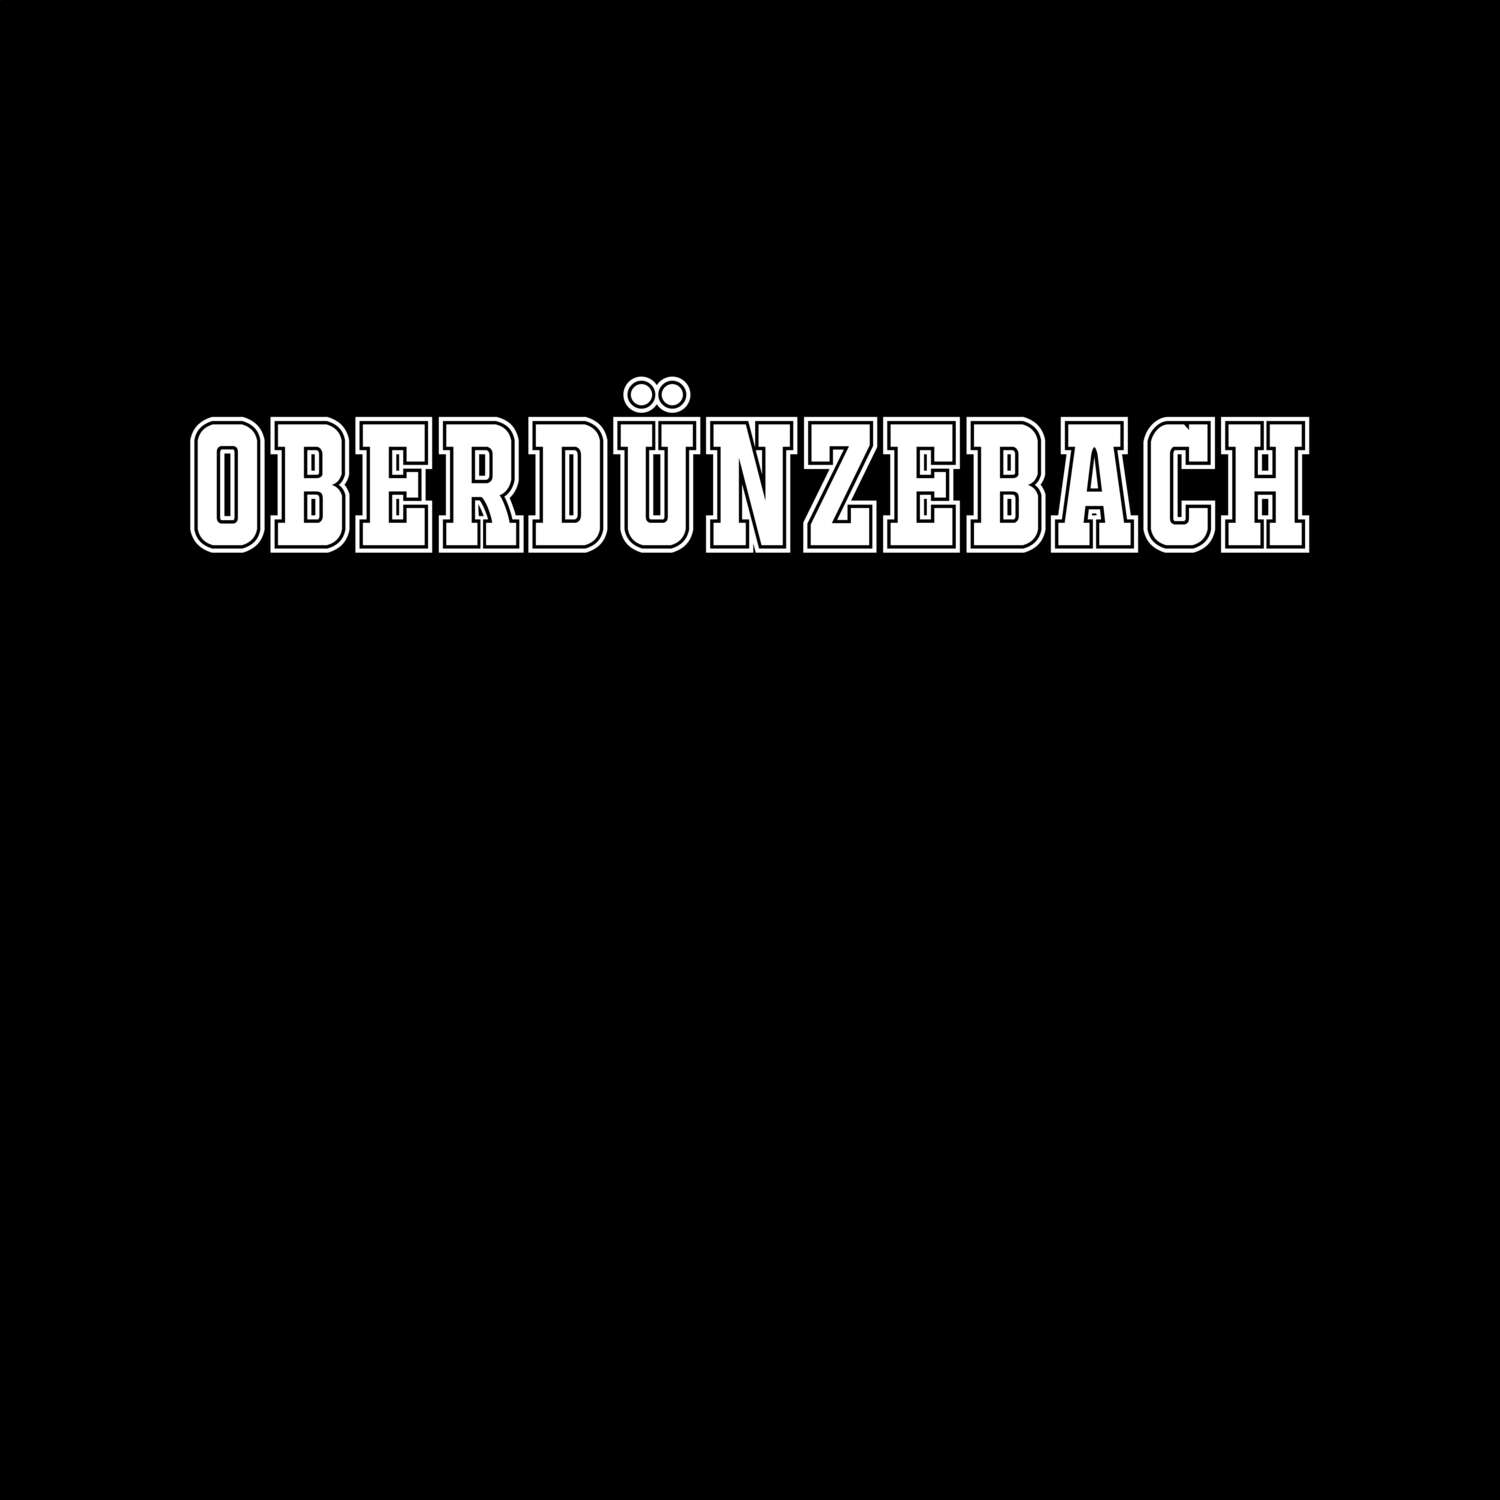 Oberdünzebach T-Shirt »Classic«